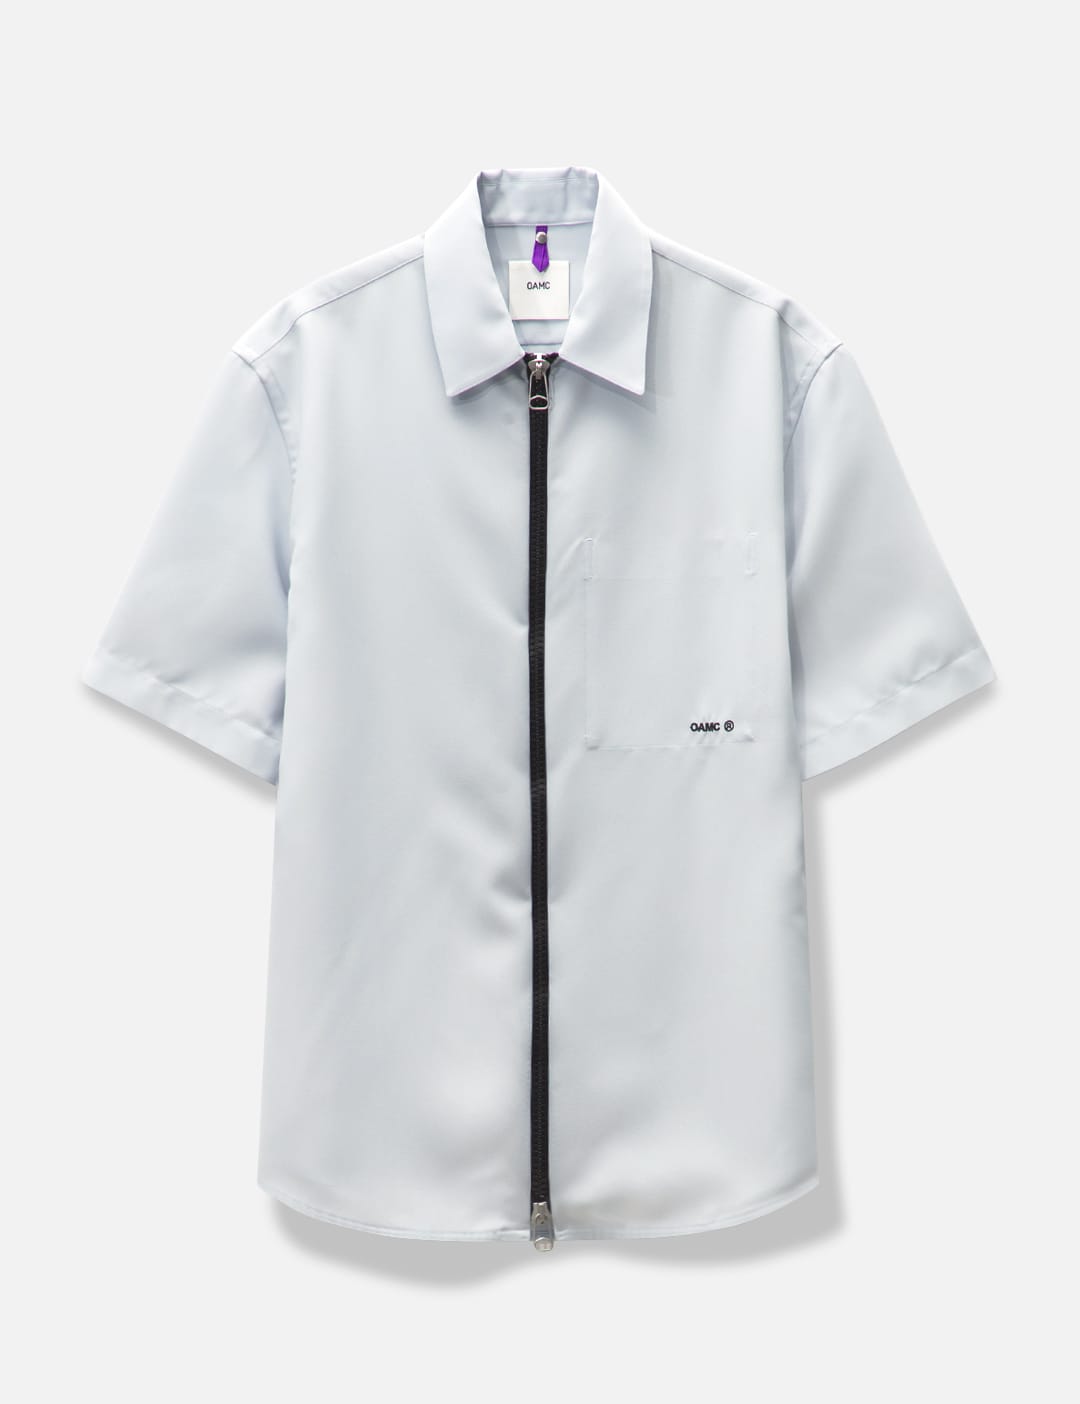 OAMC - Short-Sleeved Ian Shirt | HBX - Globally Curated Fashion